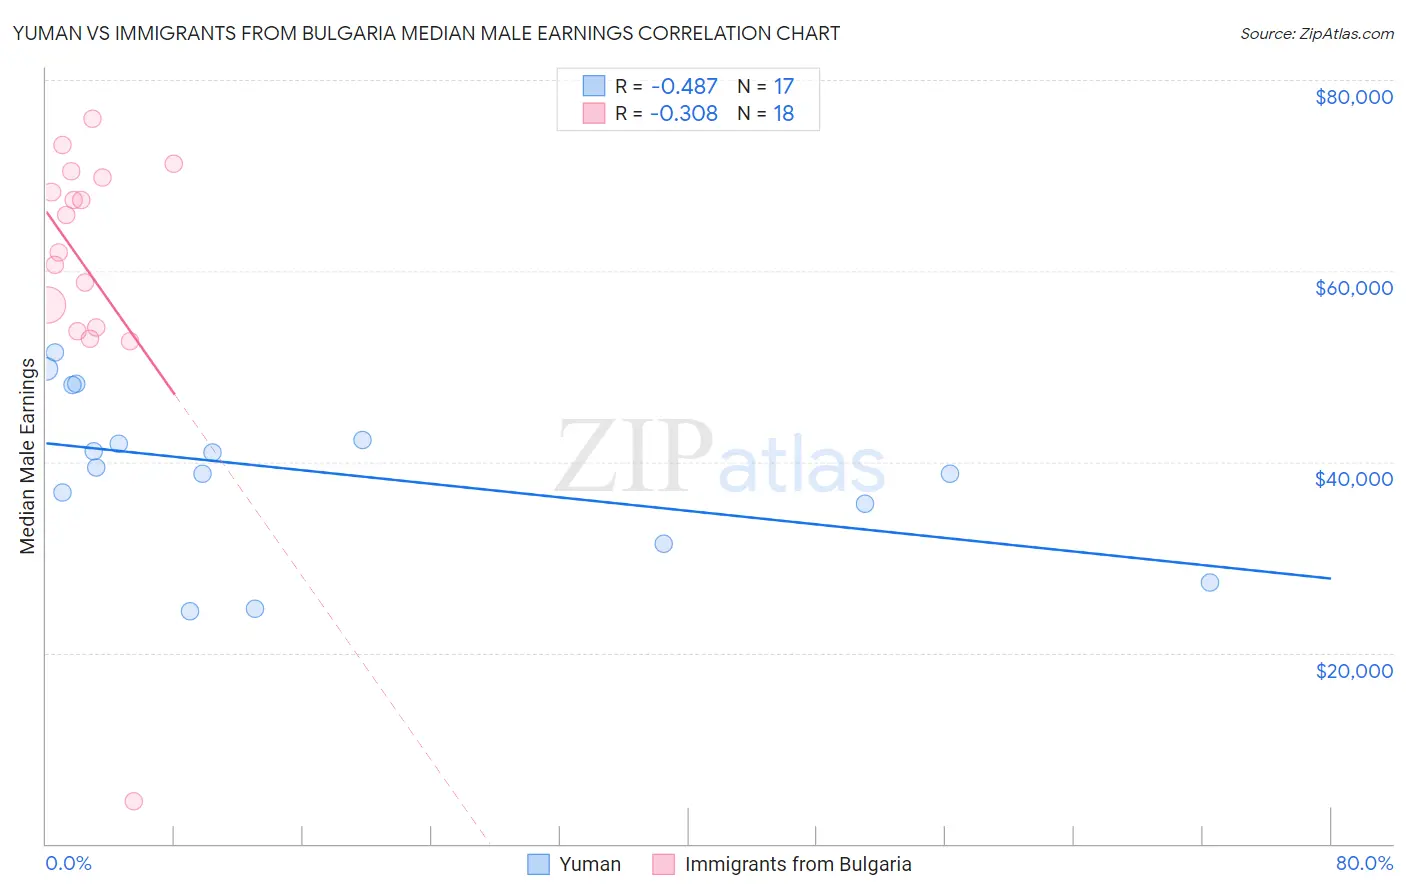 Yuman vs Immigrants from Bulgaria Median Male Earnings